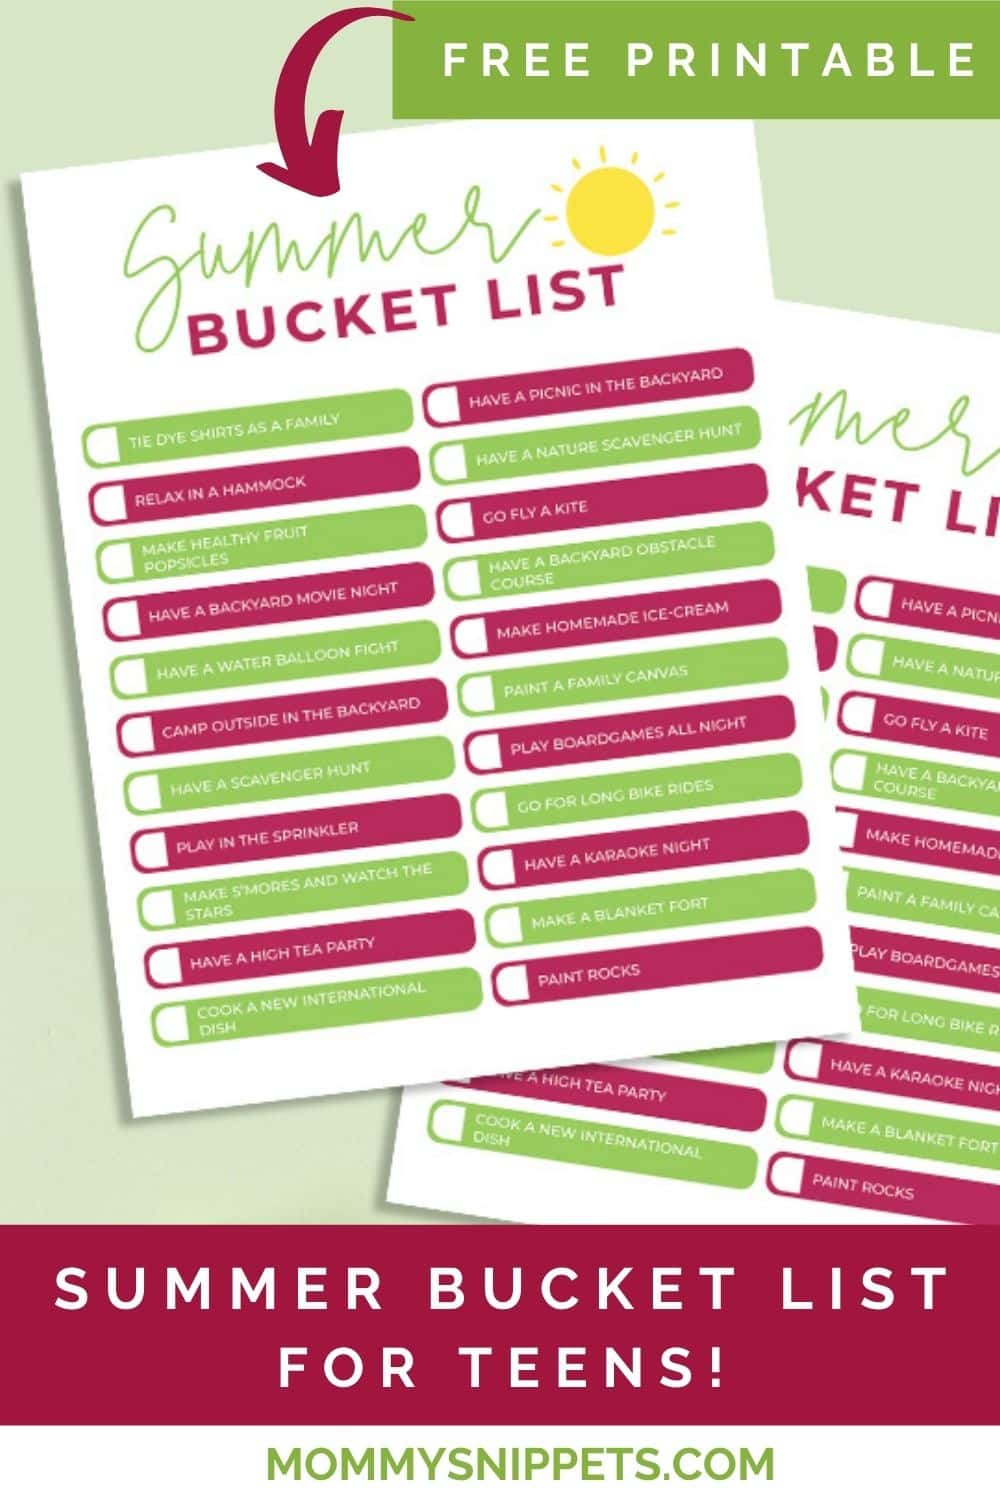 Summer Bucket List Ideas + A Free Printable Summer Bucket List for Teens